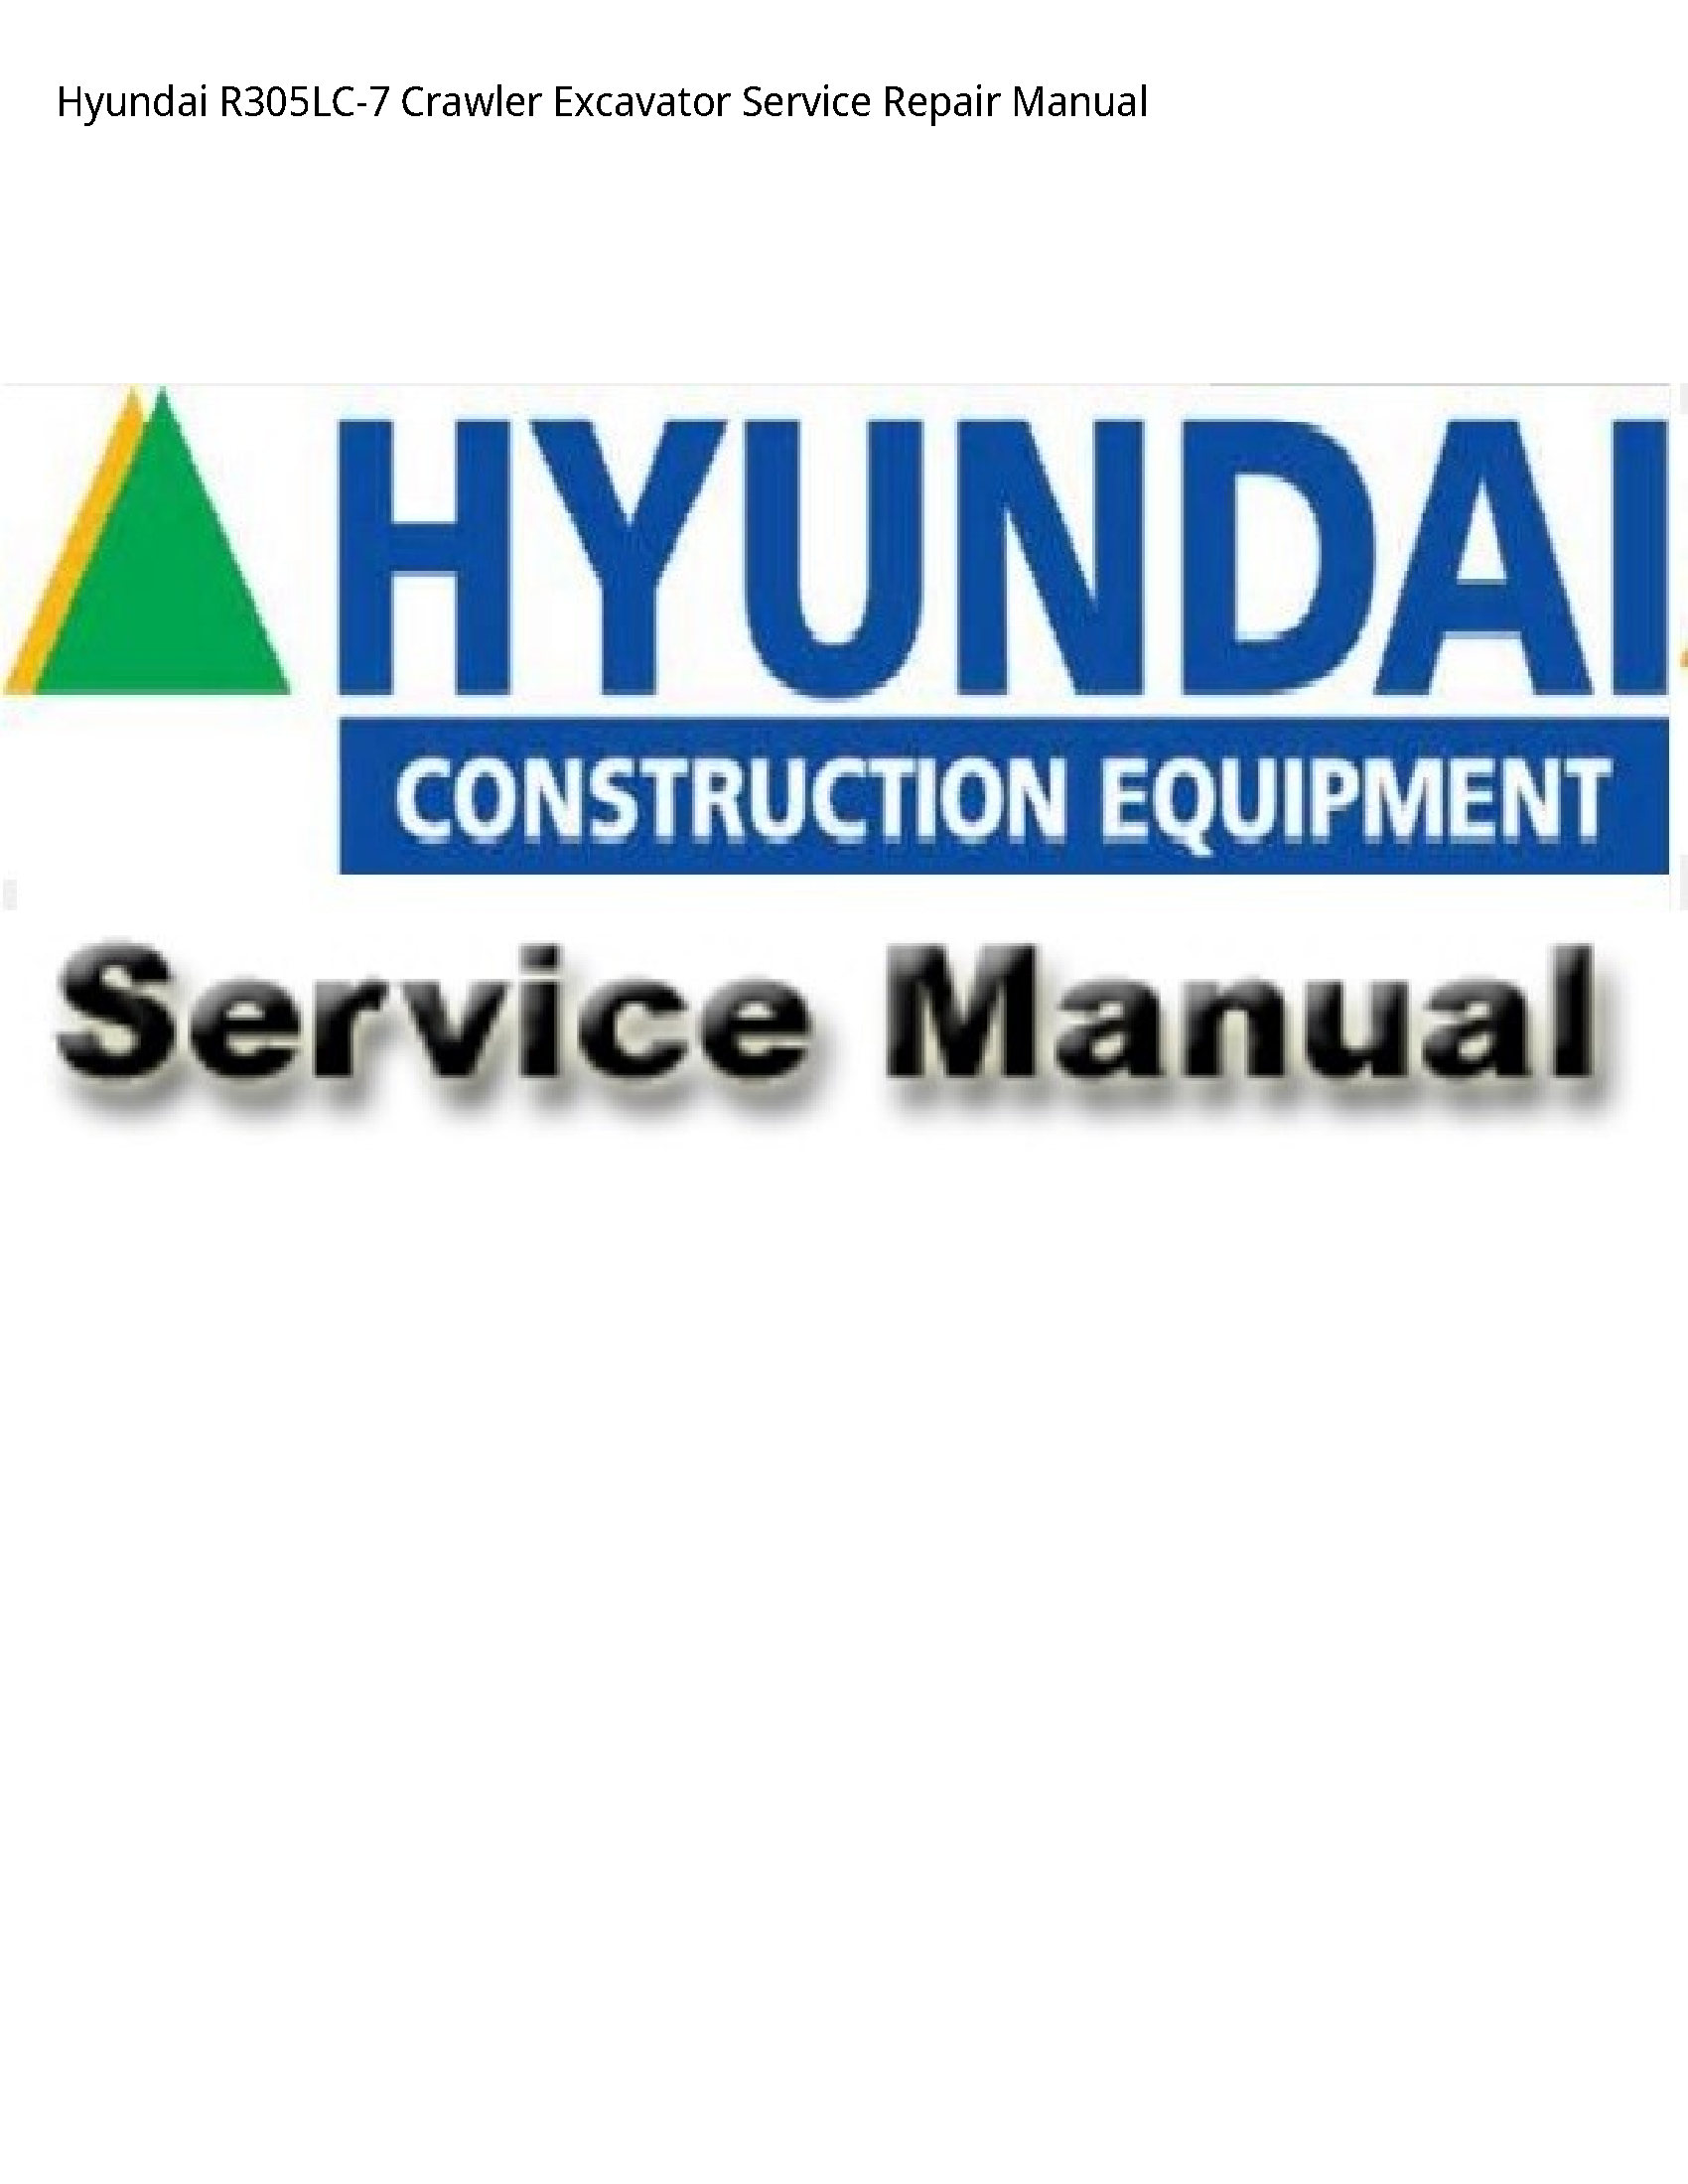 Hyundai R305LC-7 Crawler Excavator manual